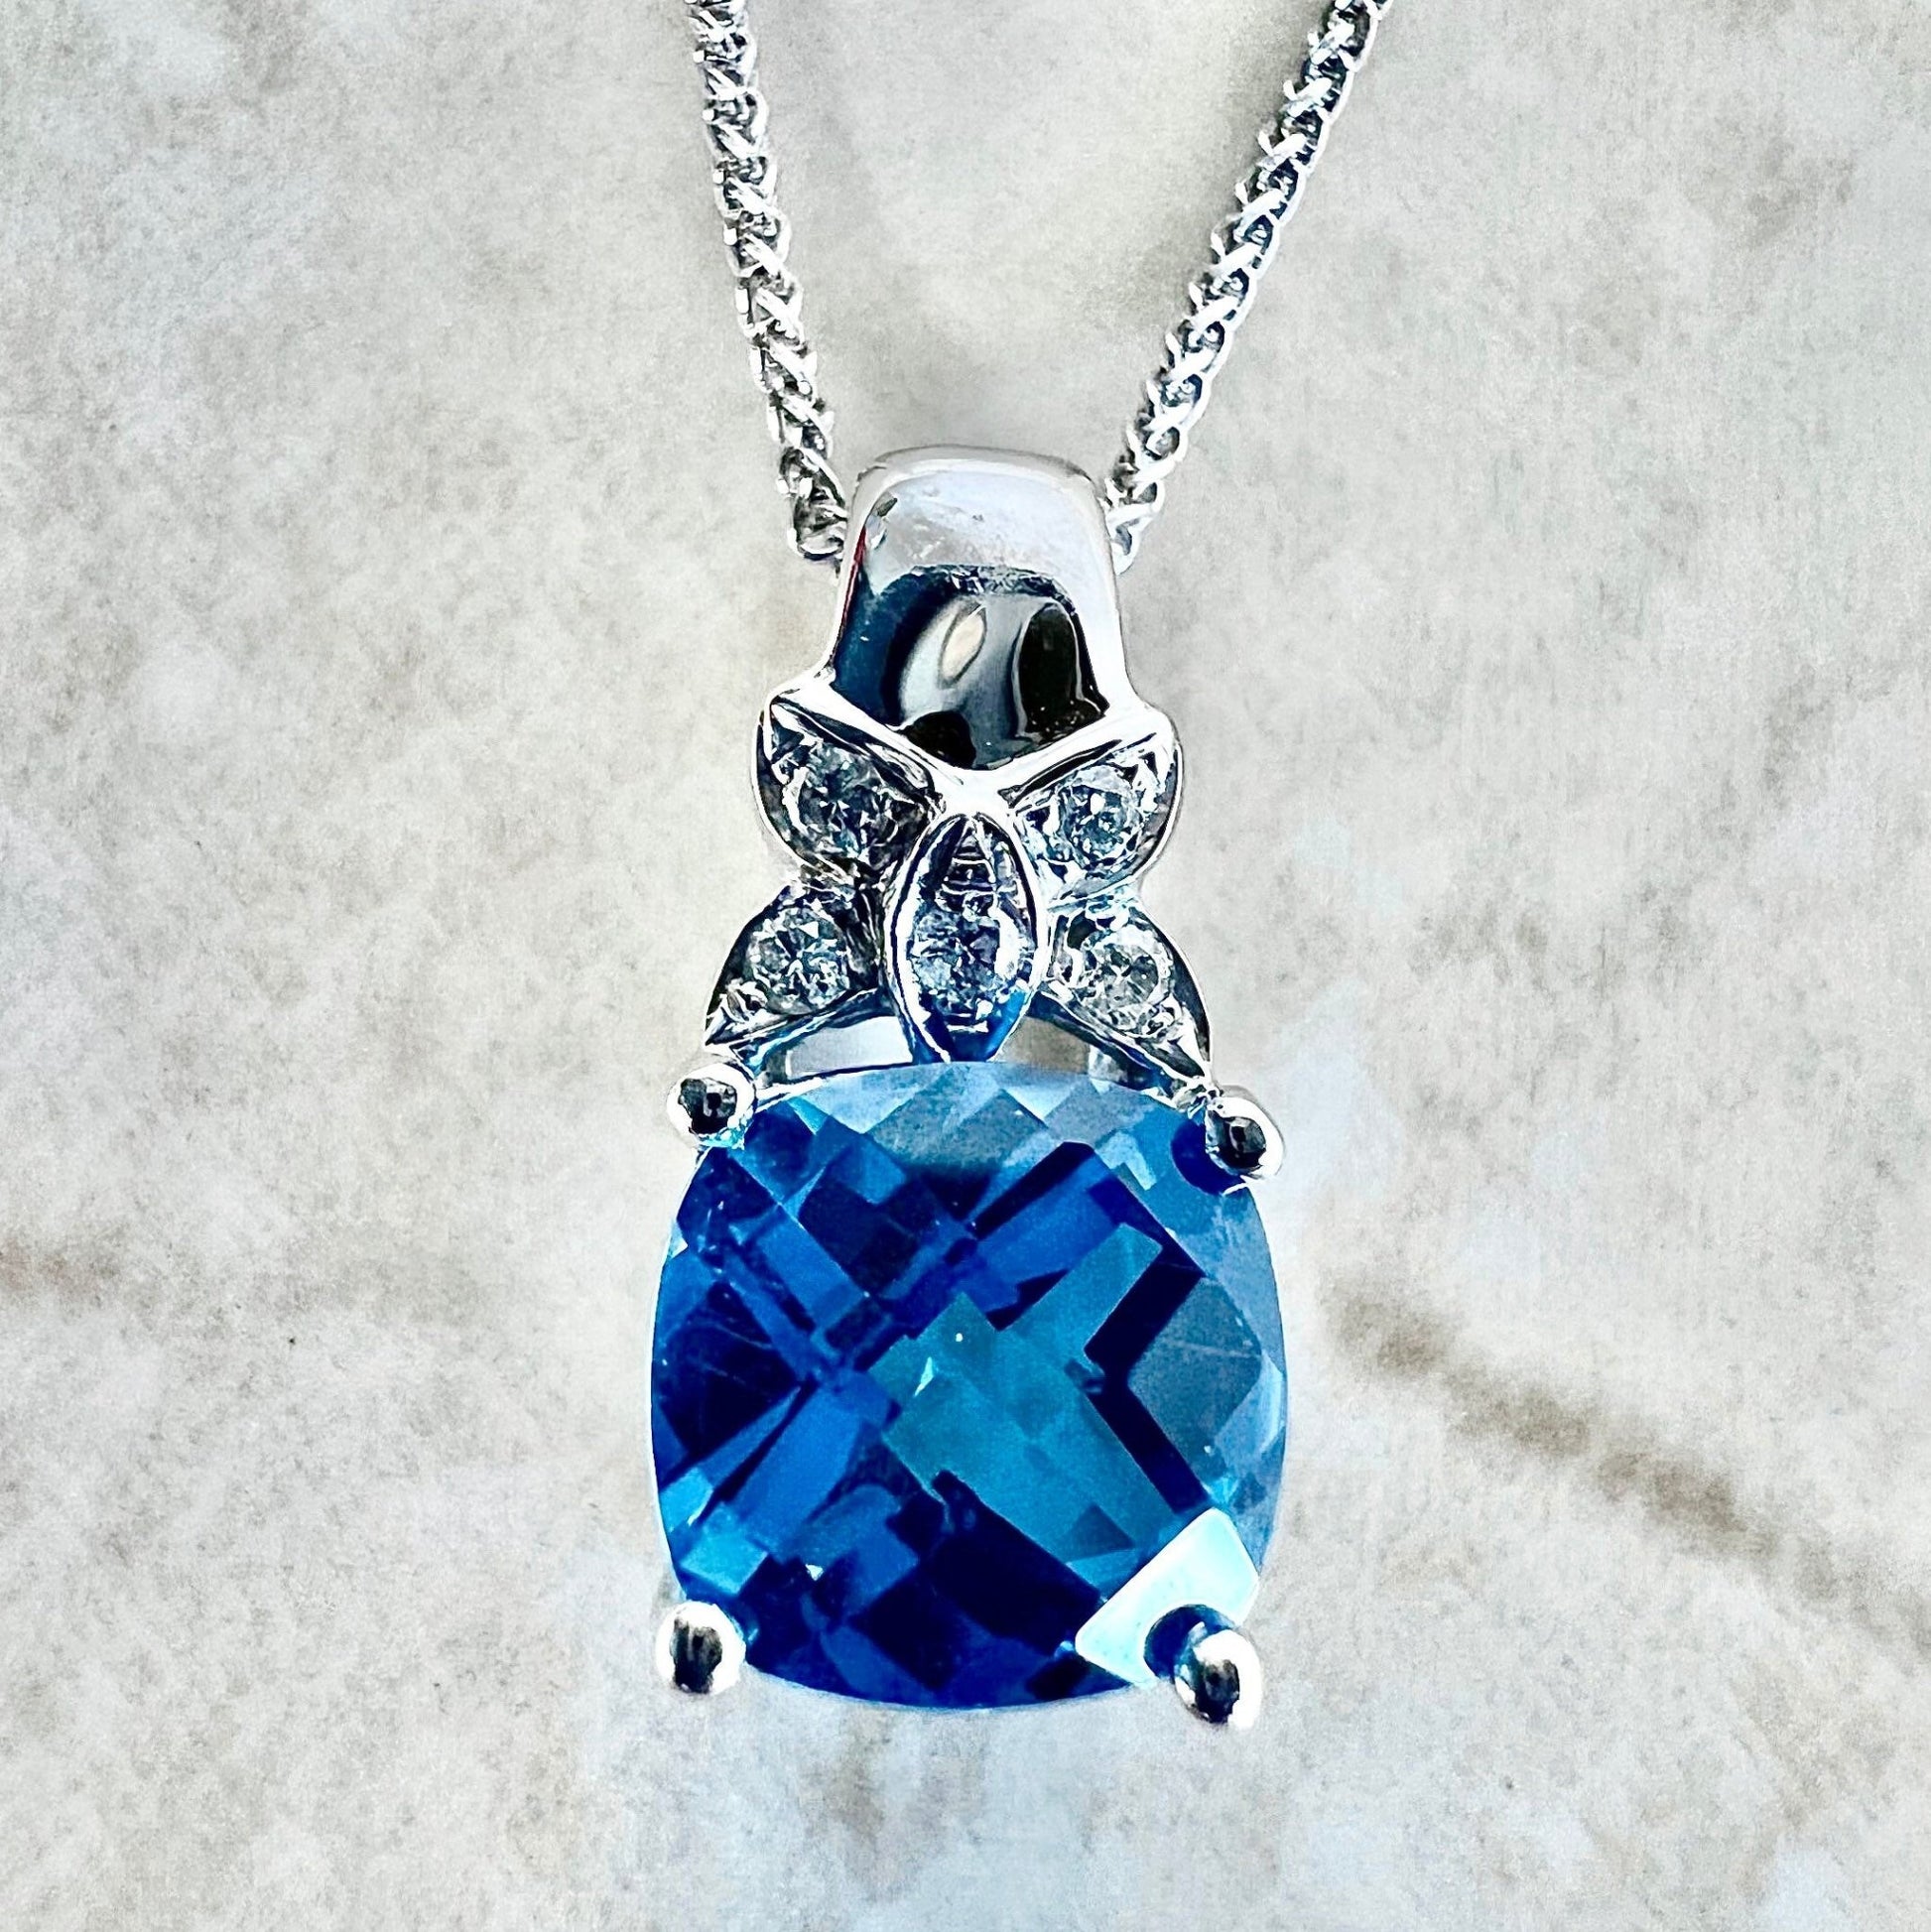 14K Swiss Blue Topaz & Diamond Pendant Necklace - White Gold Topaz Pendant - Genuine November December Birthstone - Birthday Gift